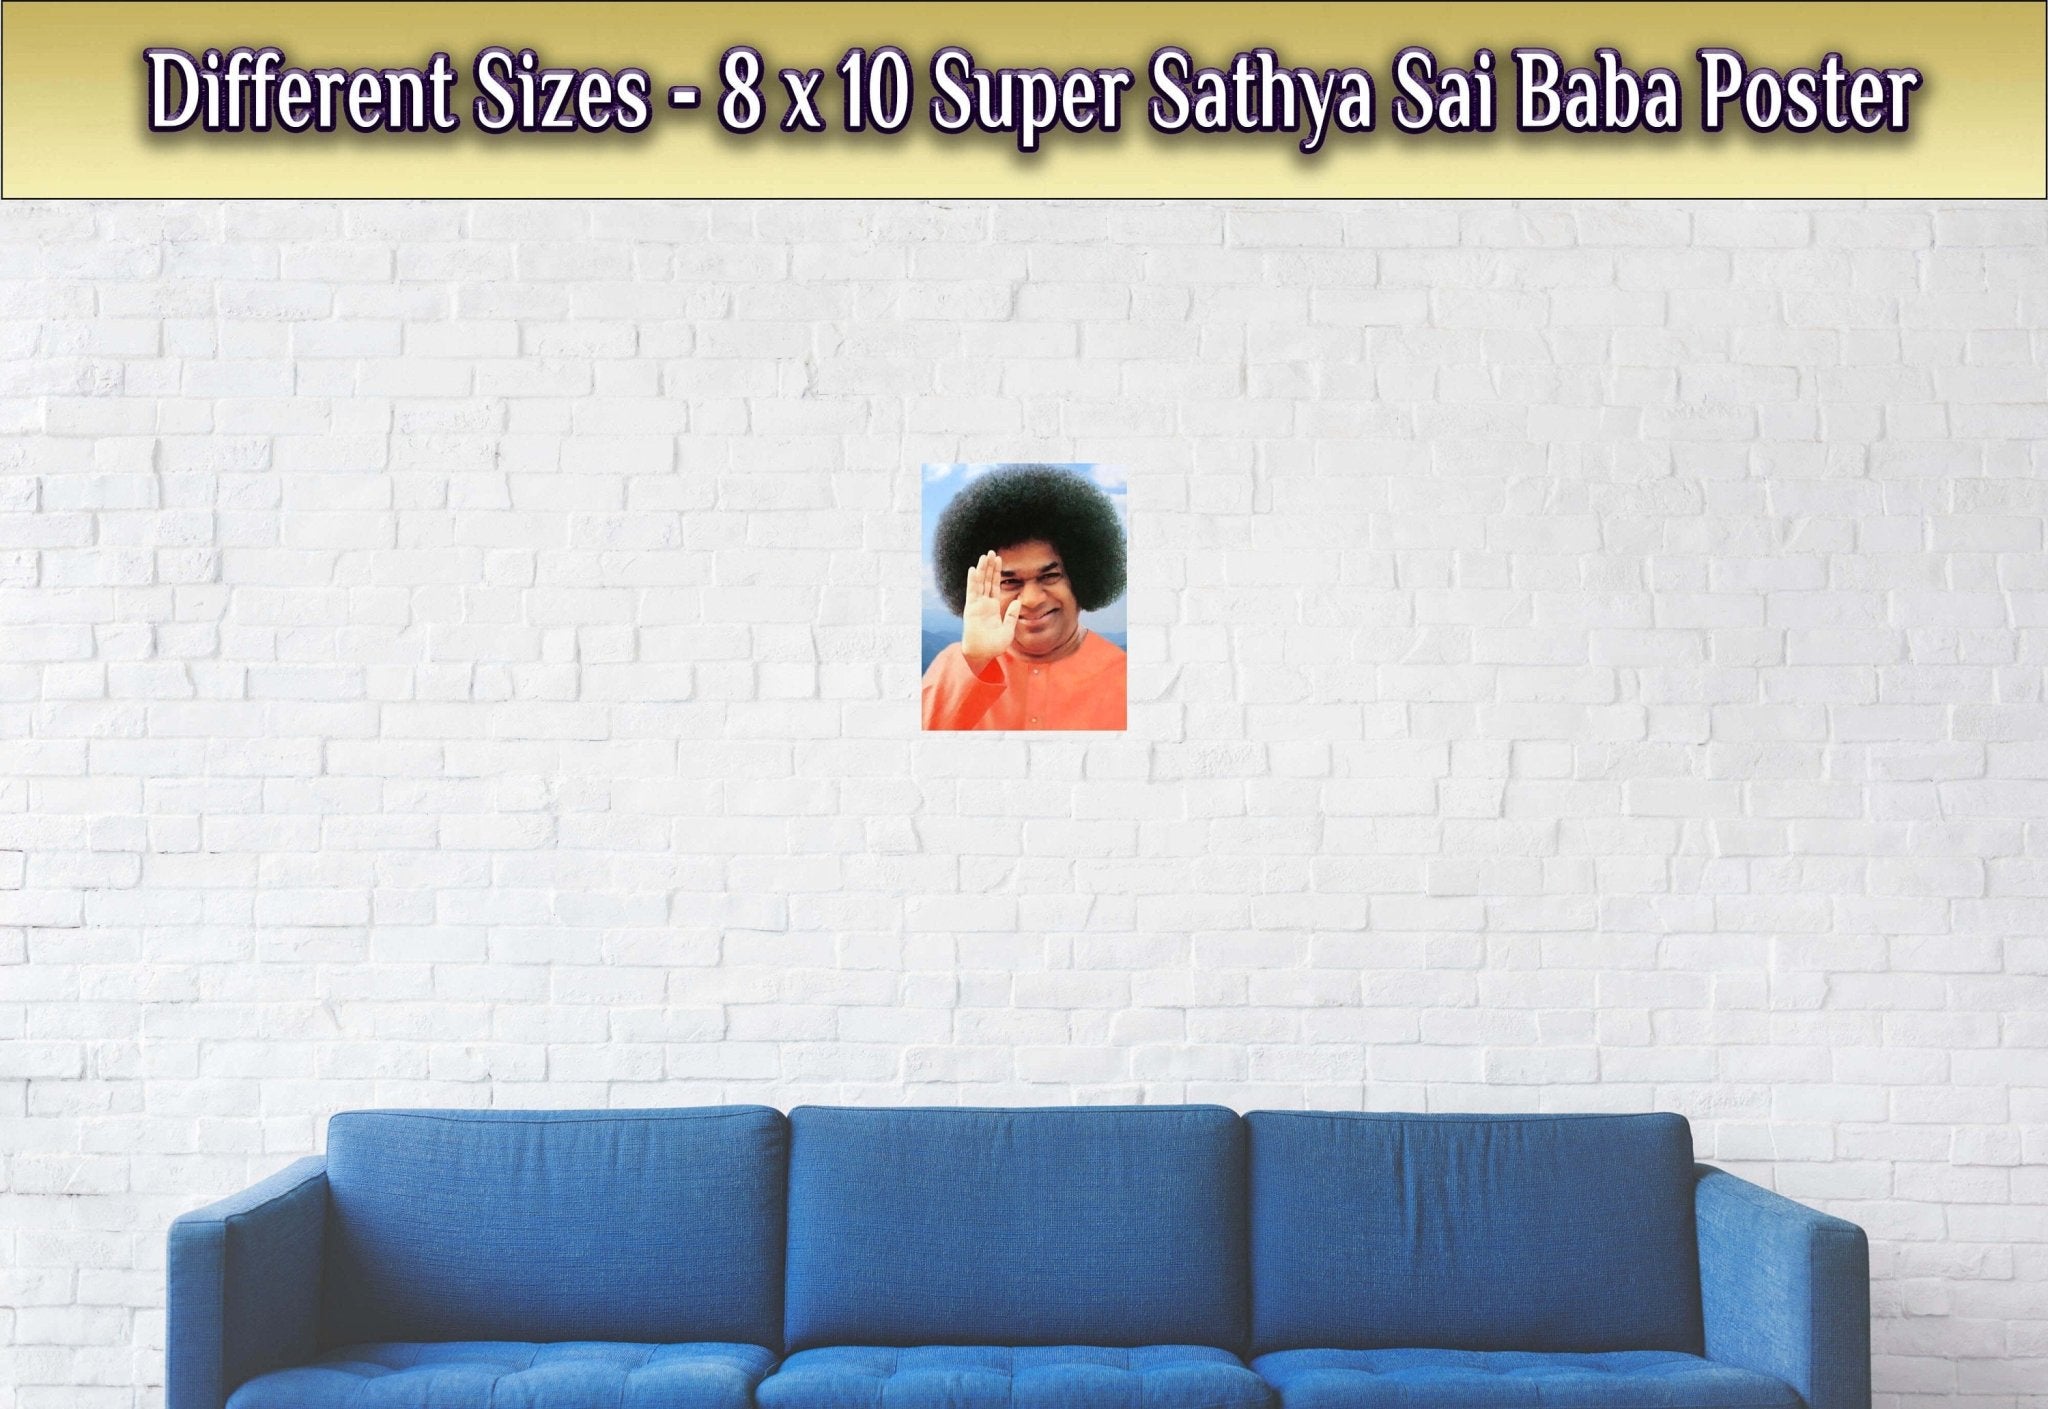 Sathya Sai Baba Poster Vintage Photo - Iconic Sathya Sai Baba Print - Indian Guru Shirdi Sai Baba Incarnation - WallArtPrints4U